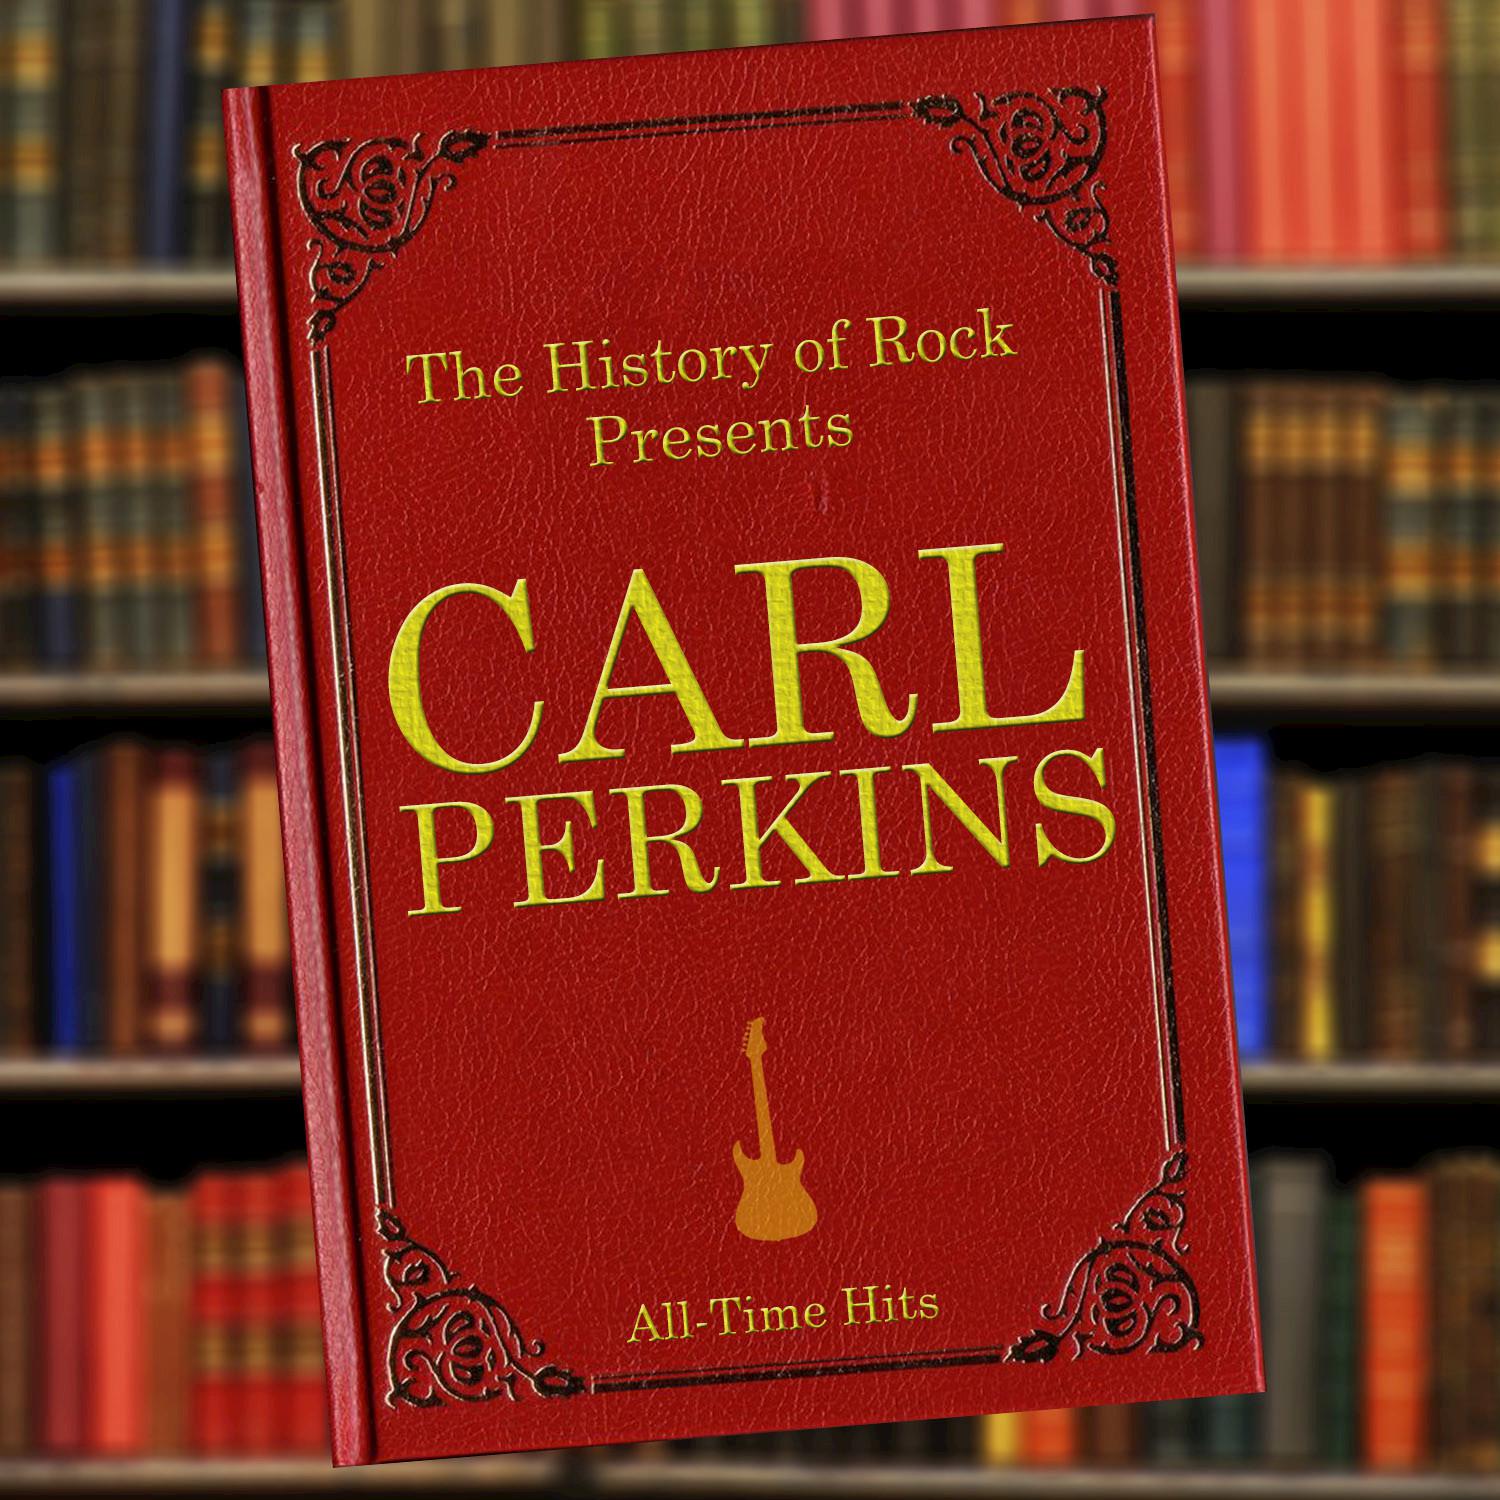 The History of Rock Presents Carl Perkins